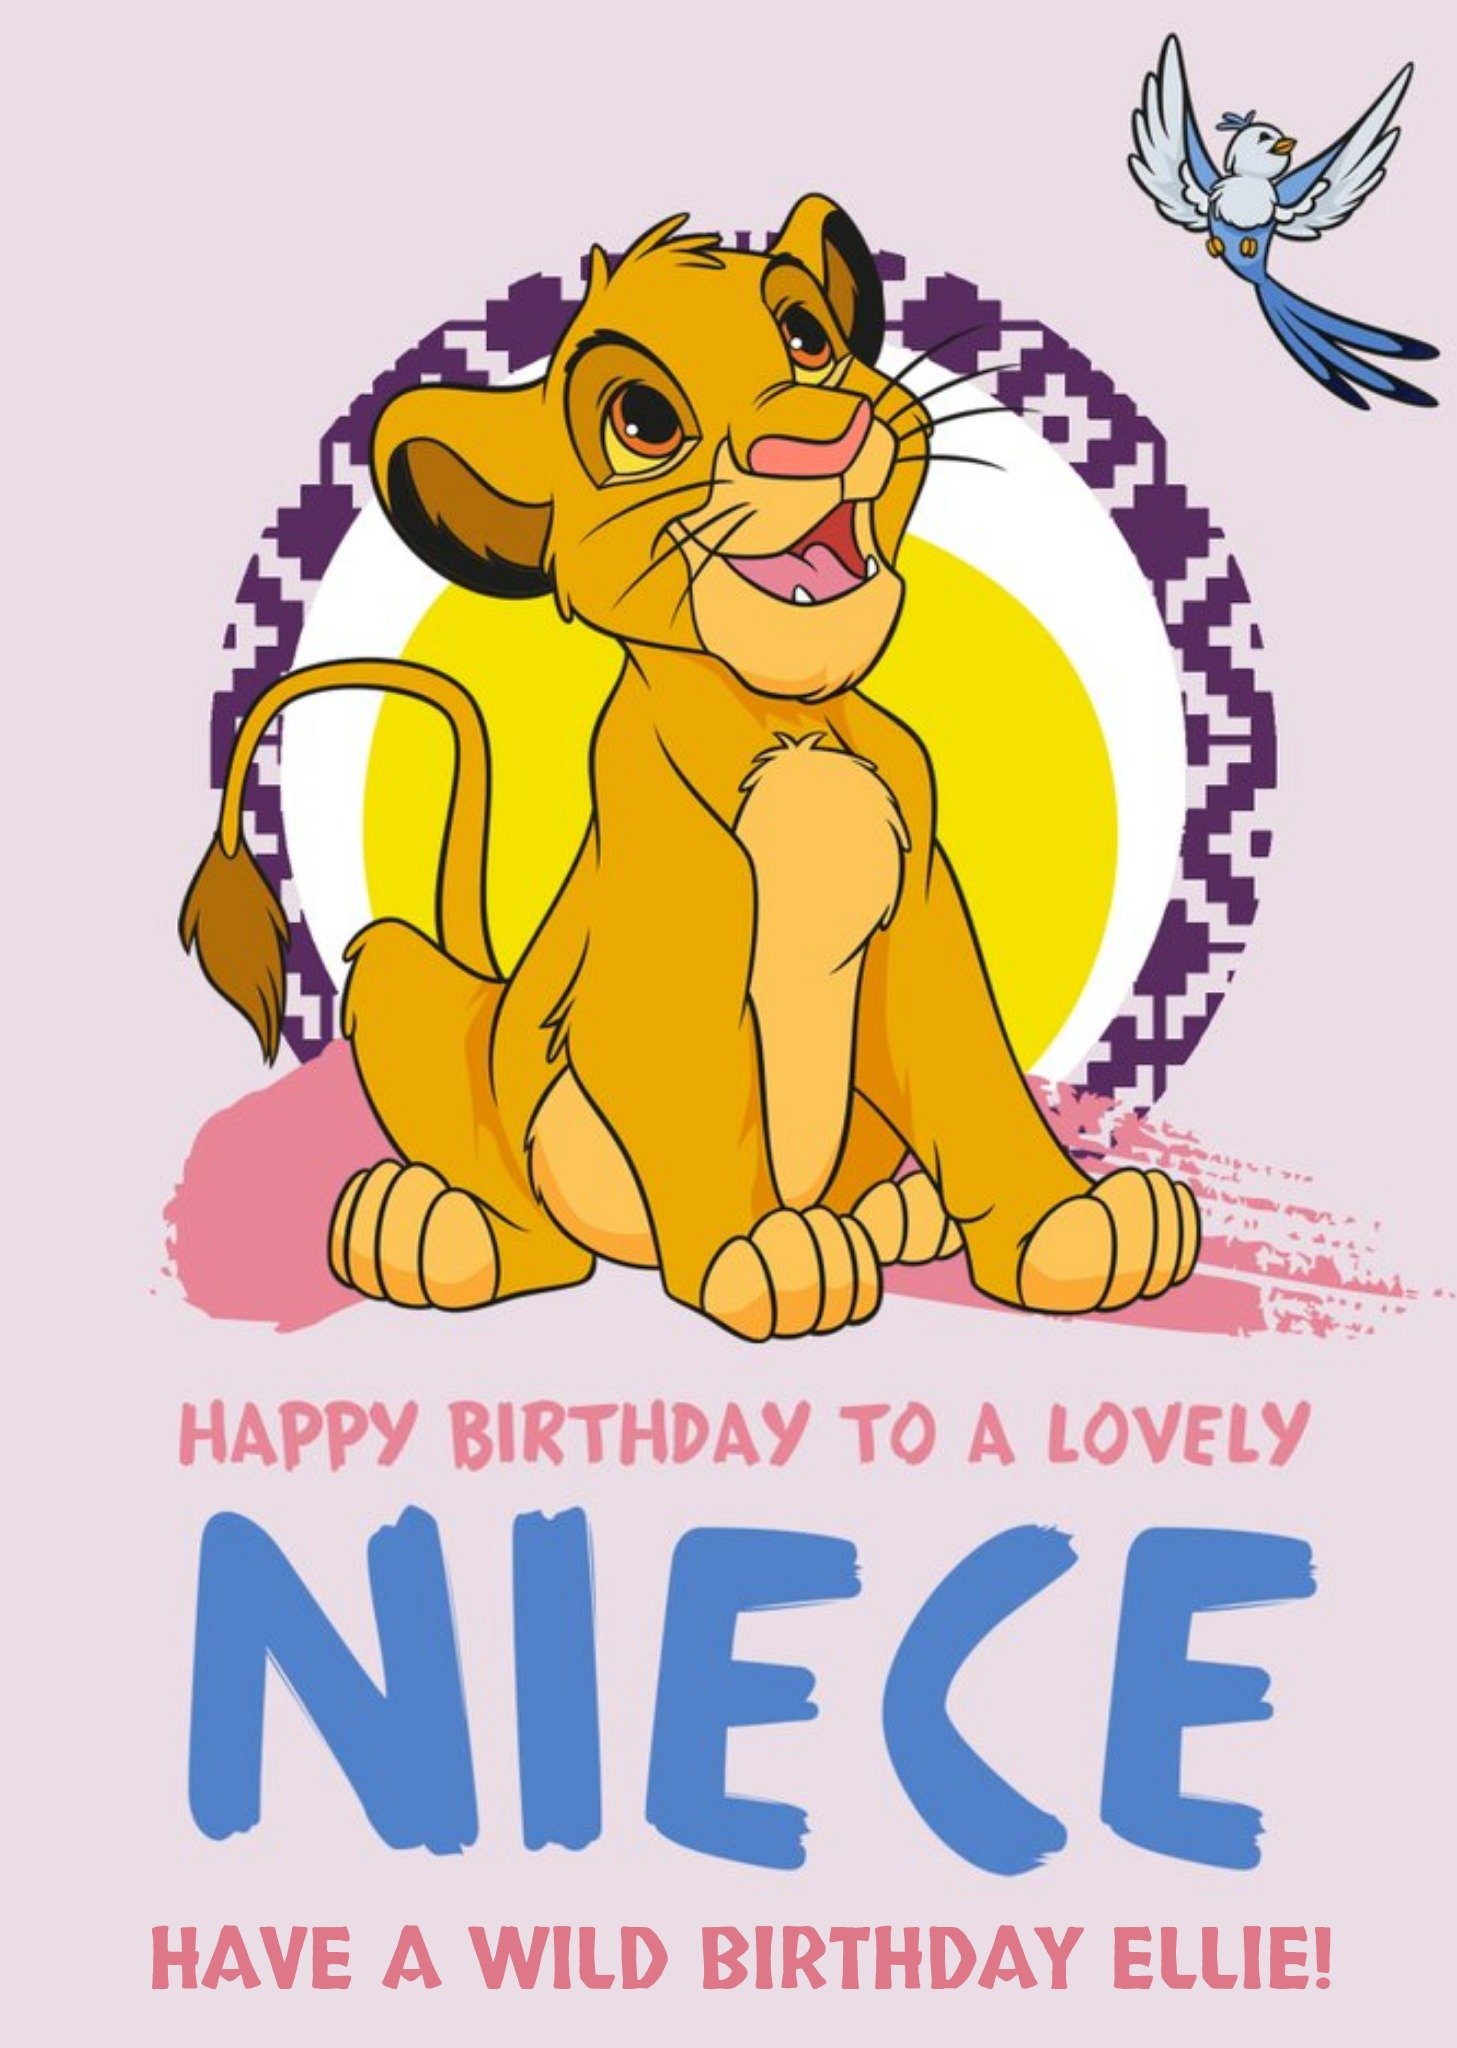 Disney Lion King Happy Birthday Card - To A Lovely Niece Ecard